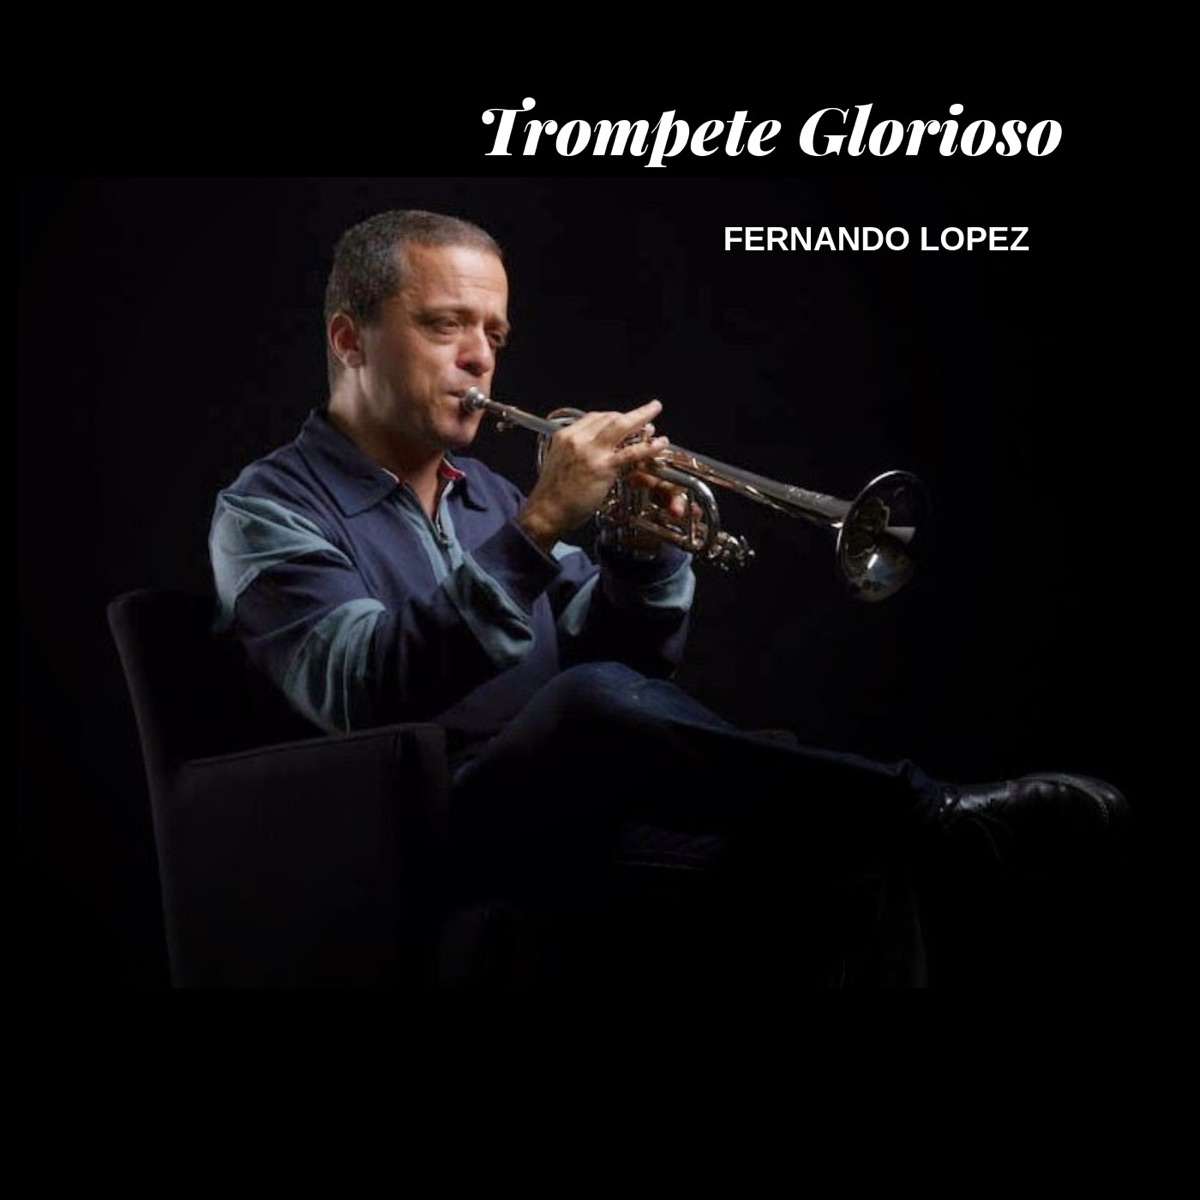 The Best of Trumpet - Album by Fernando Lopez - Apple Music